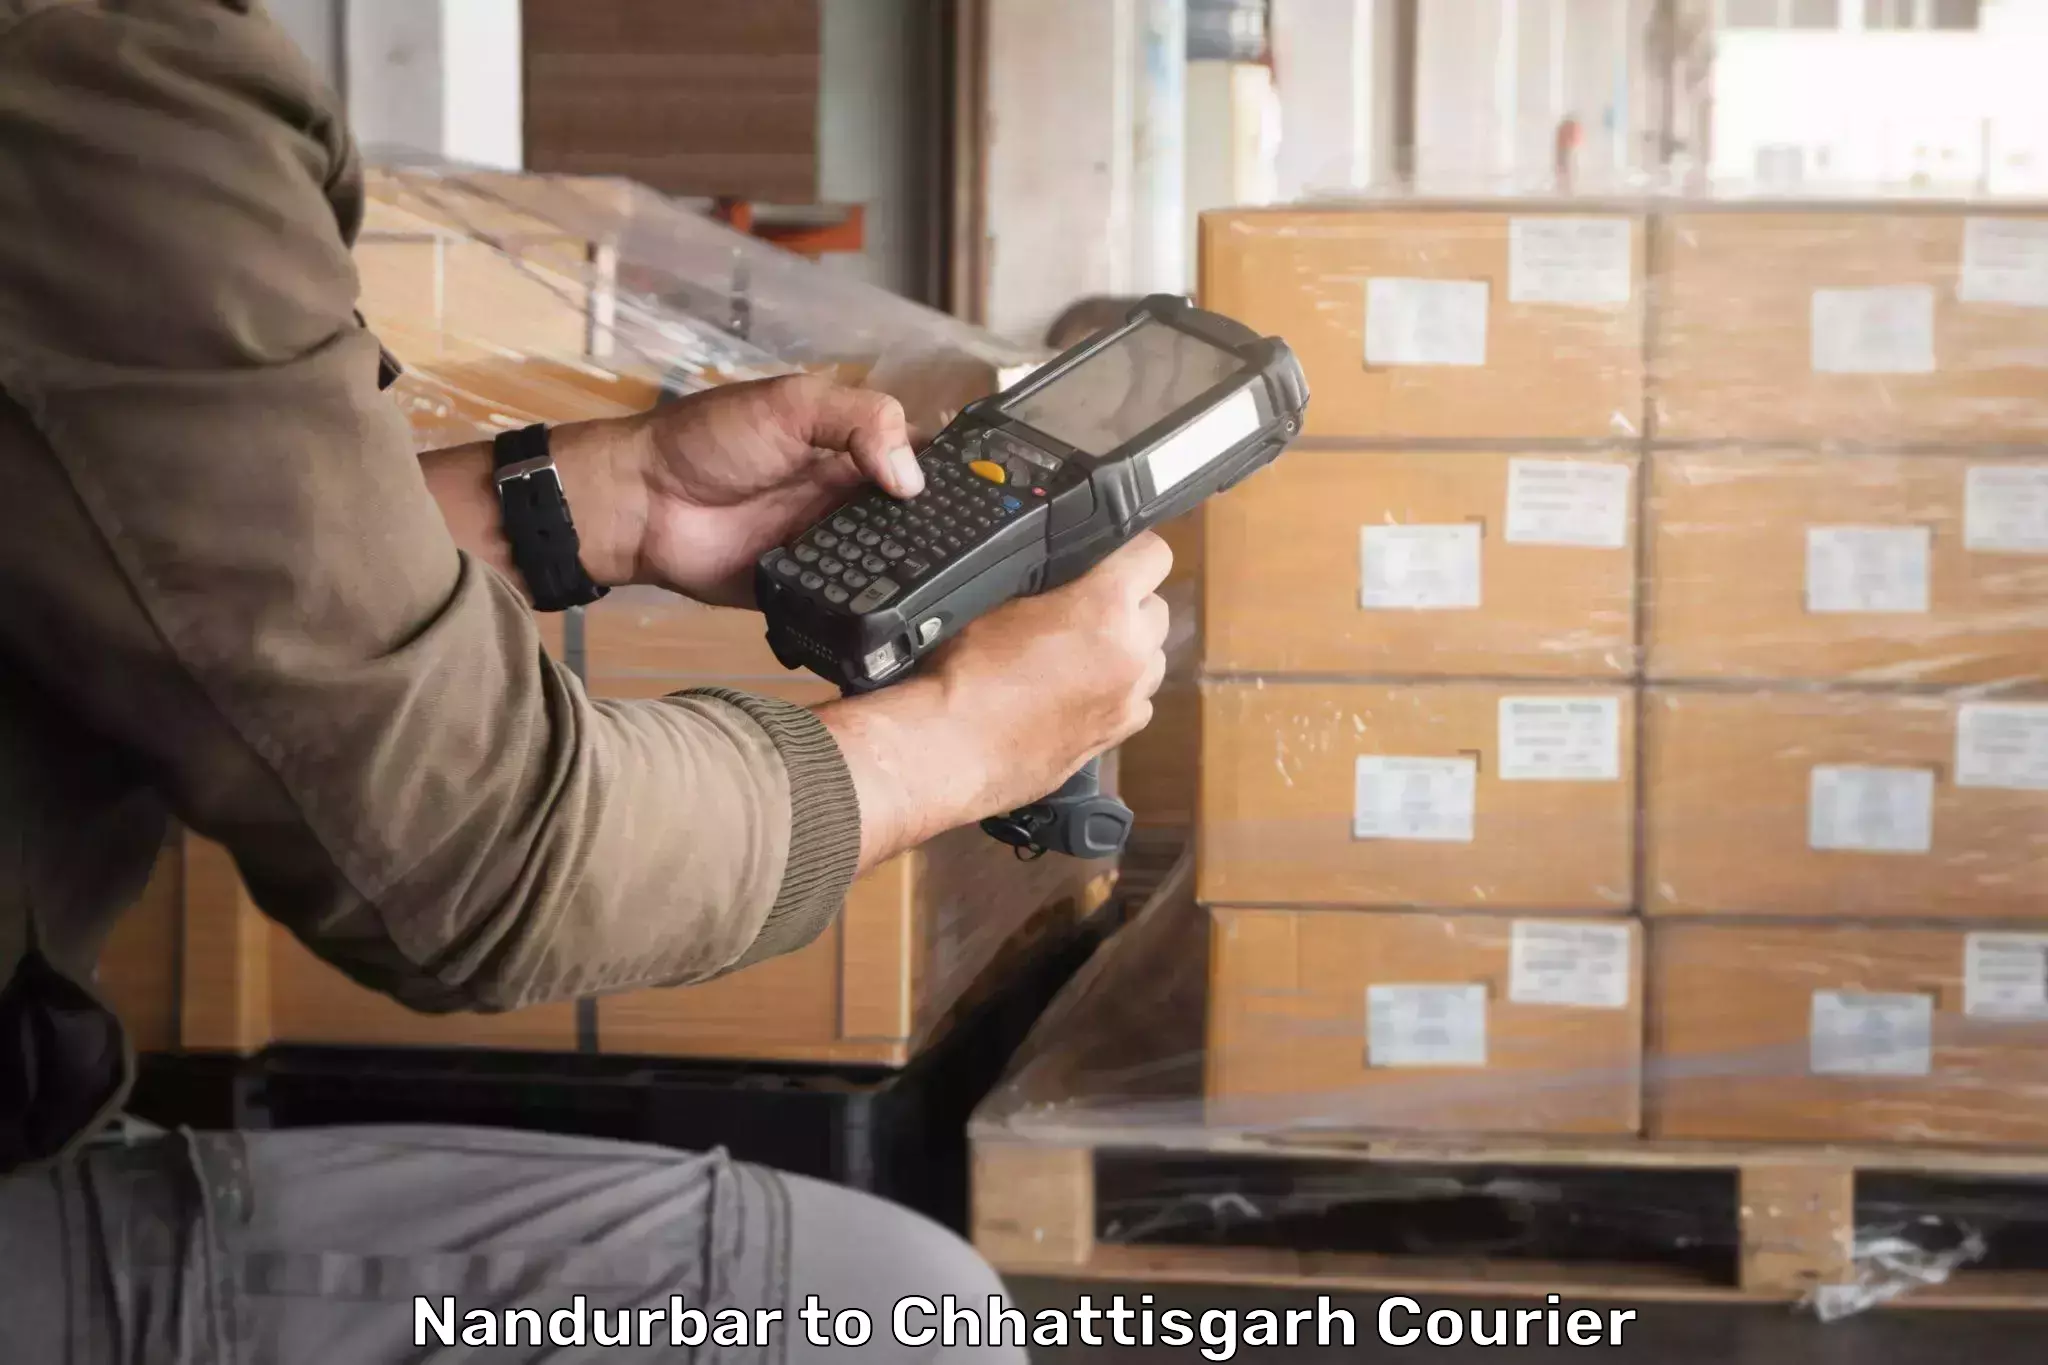 Professional courier handling Nandurbar to Rajnandgaon